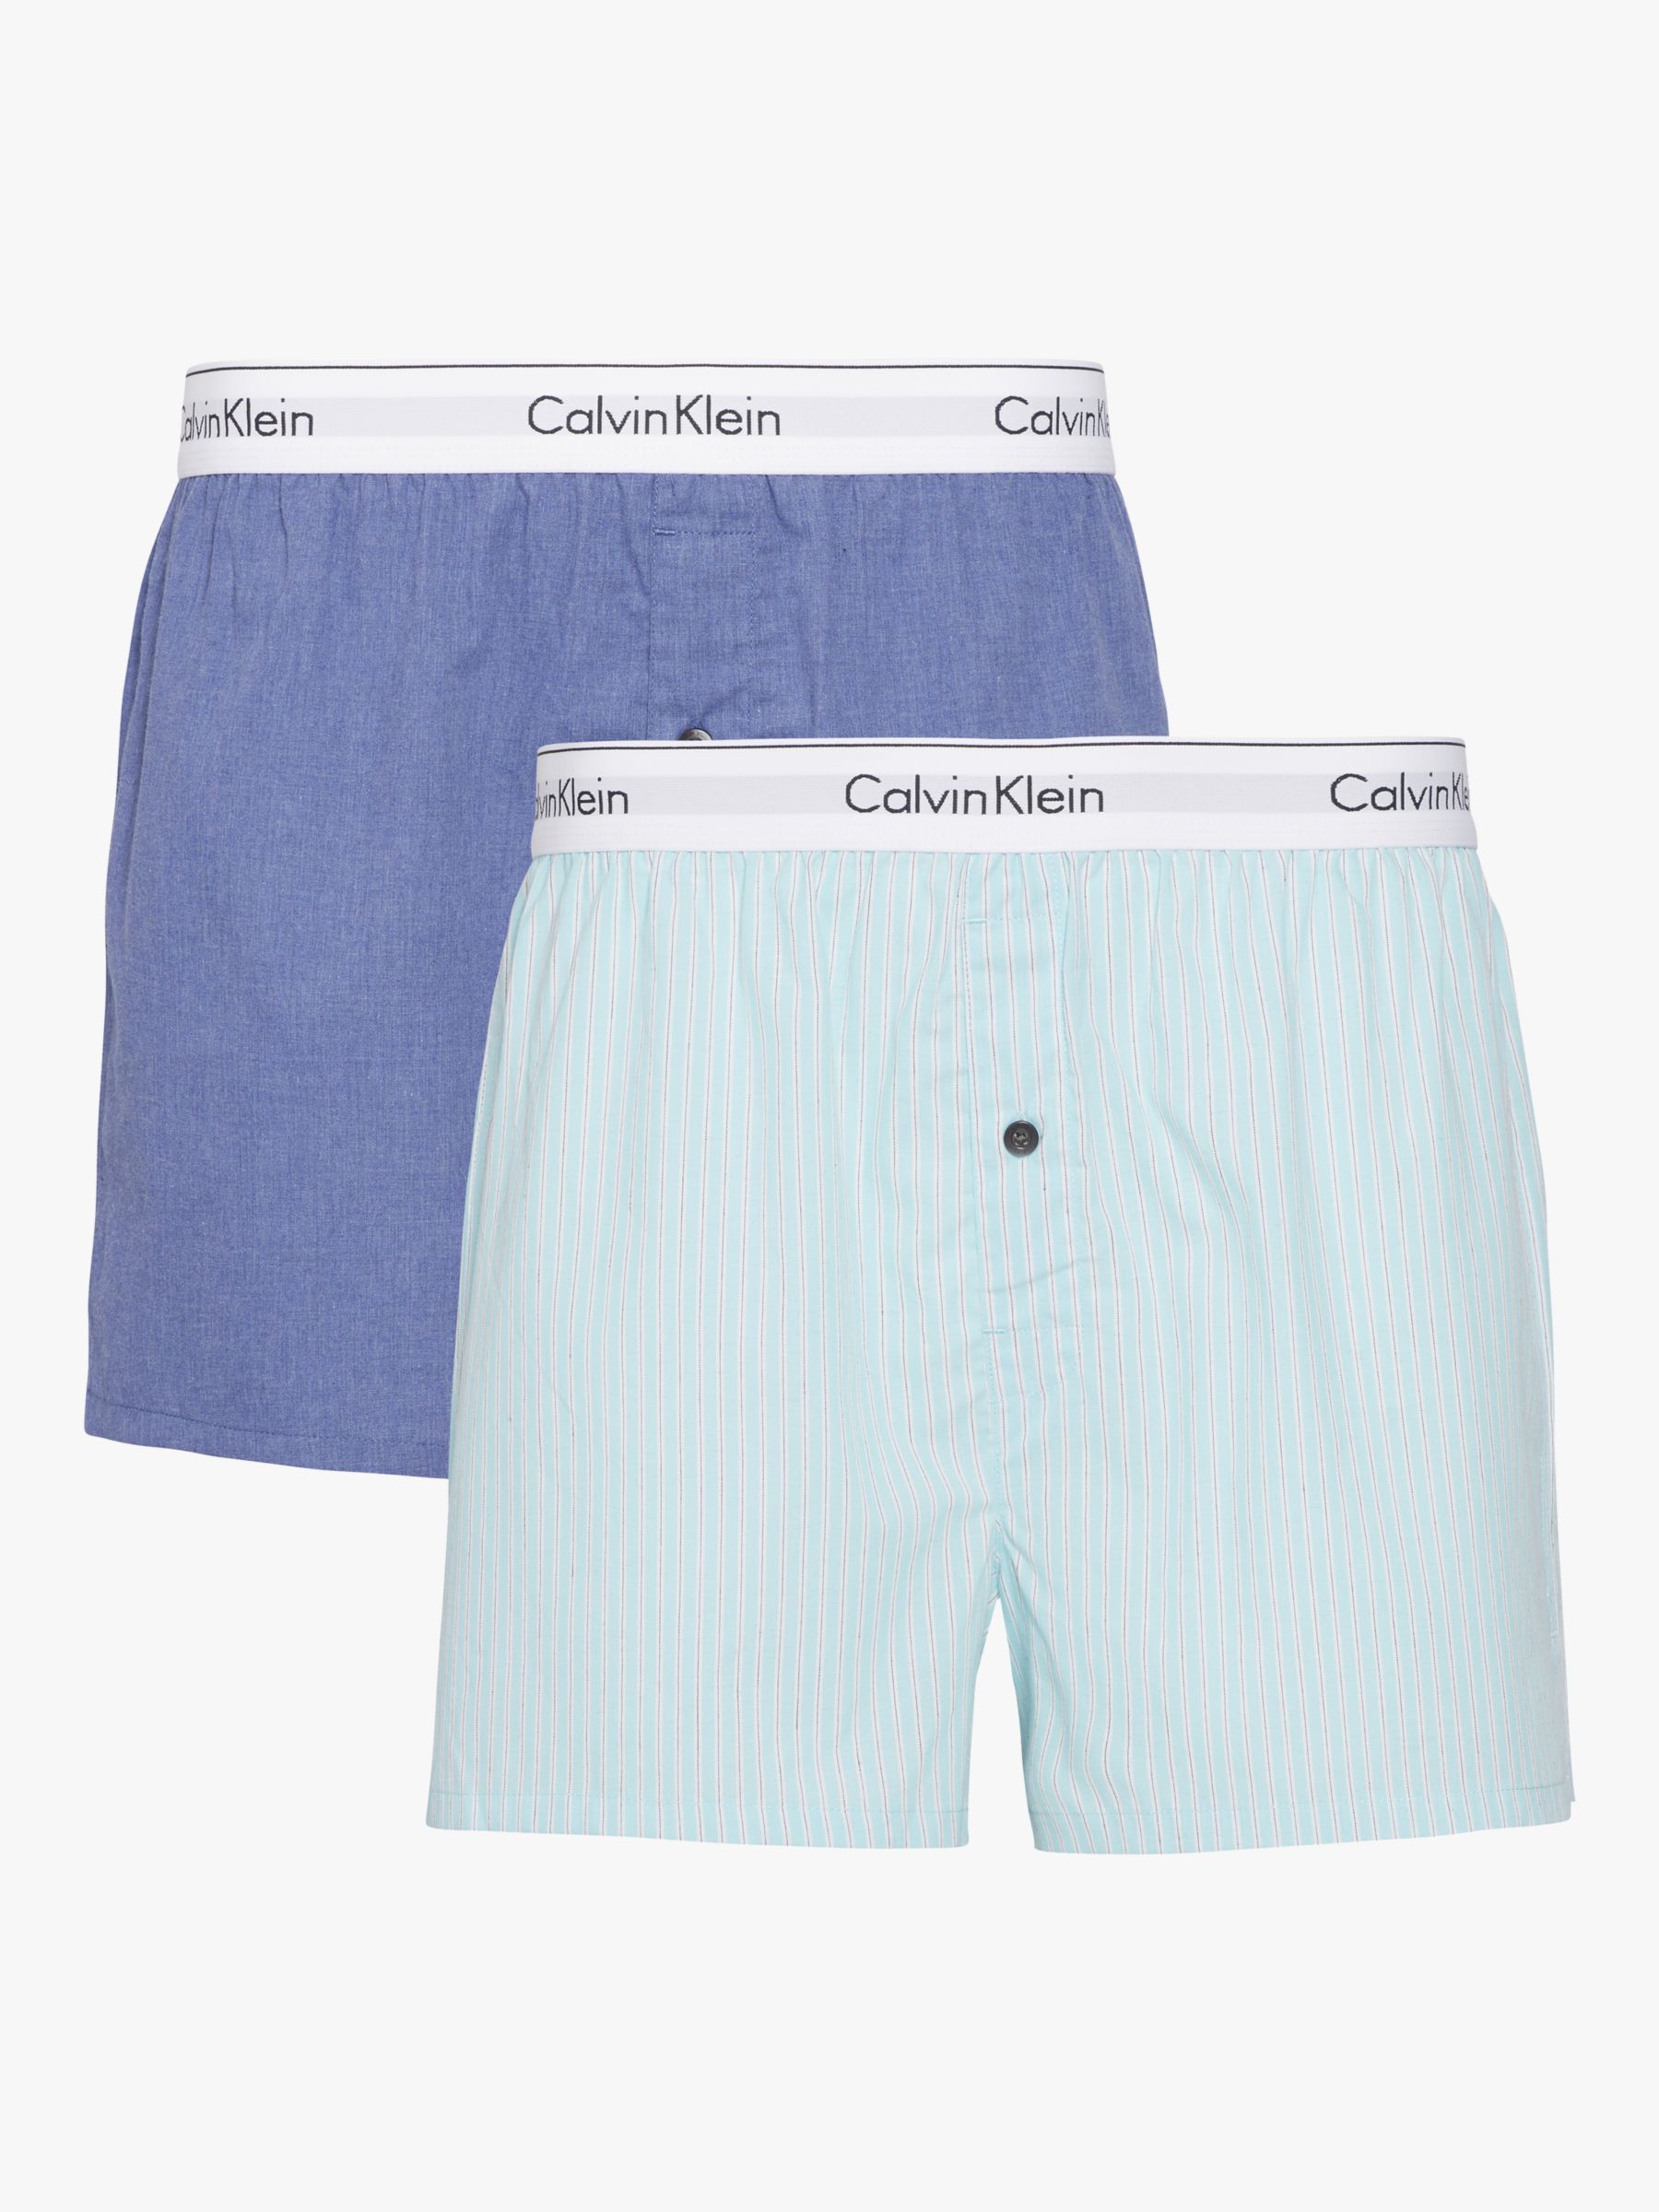 Calvin Klein Modern Cotton Slim Fit Boxers, Pack of 2, Blue/Light Blue ...